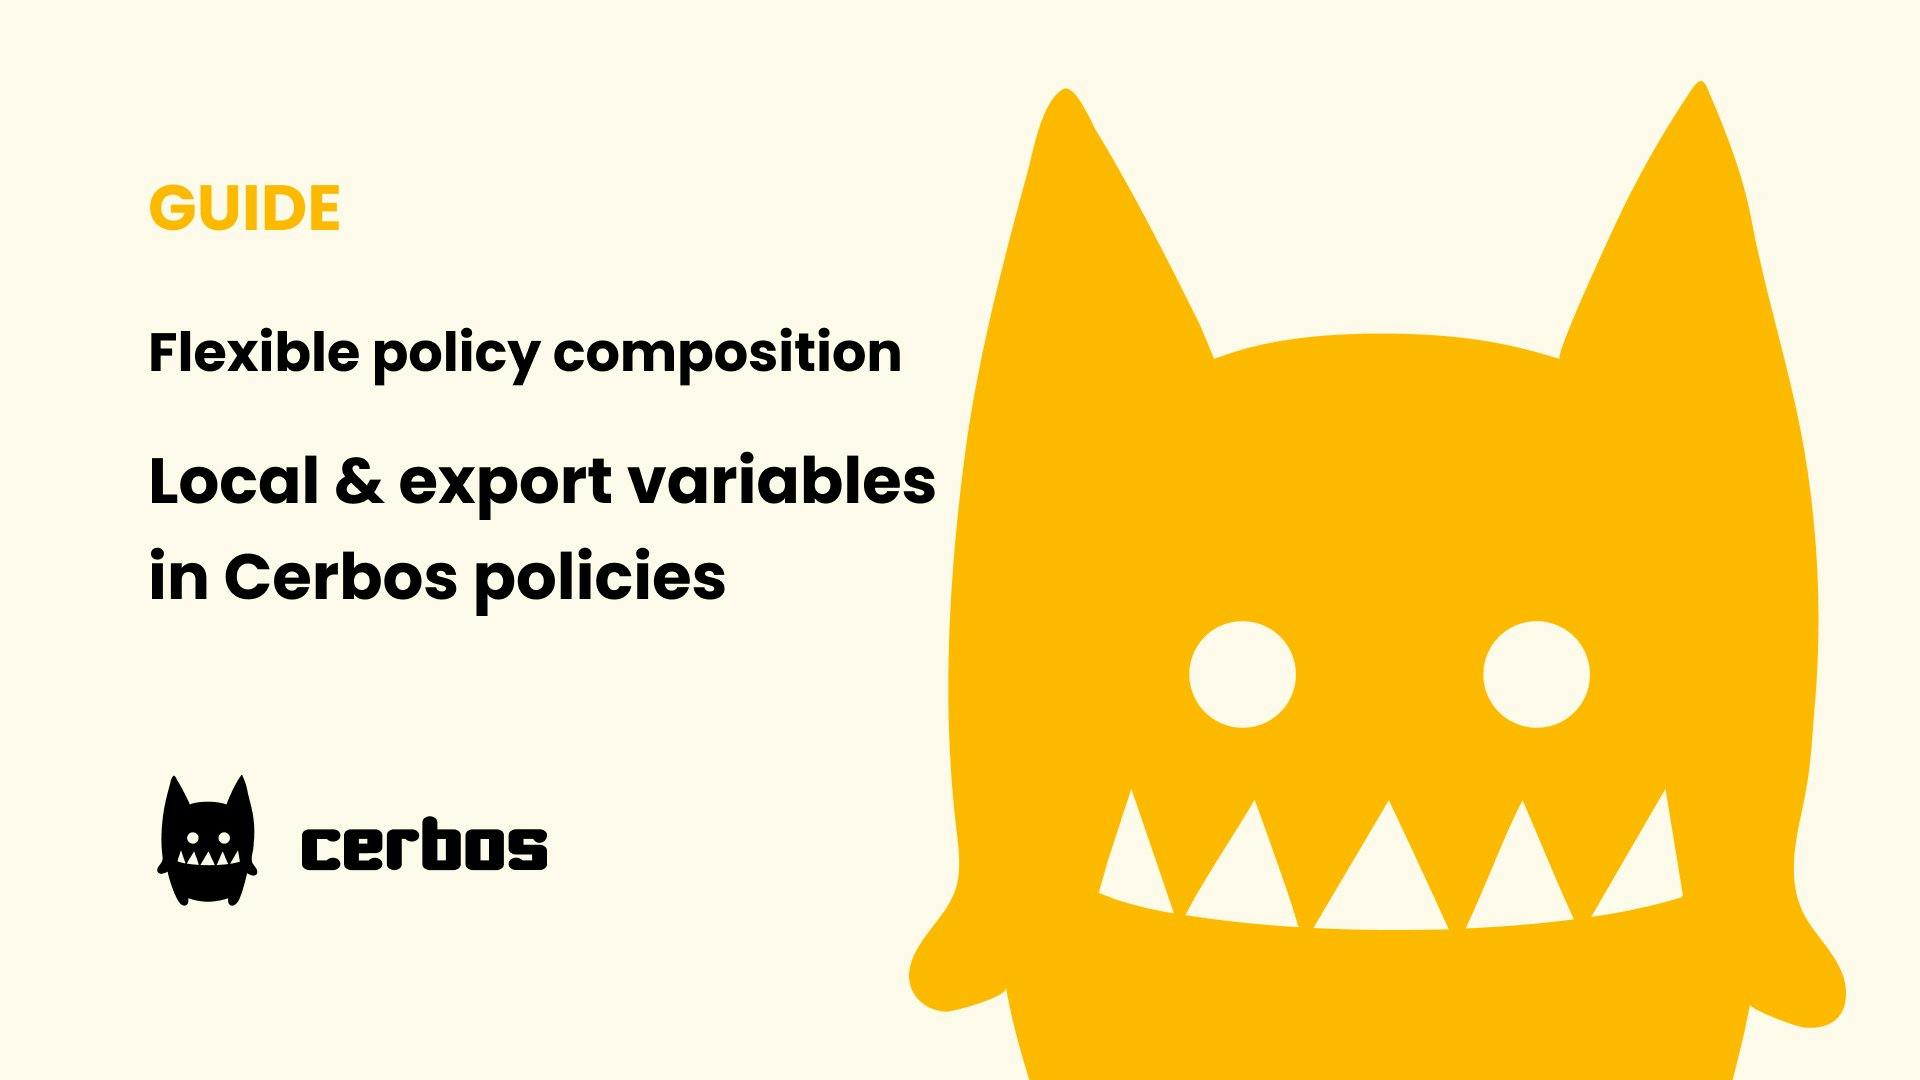 Flexible policy composition - Local & export variables in Cerbos policies